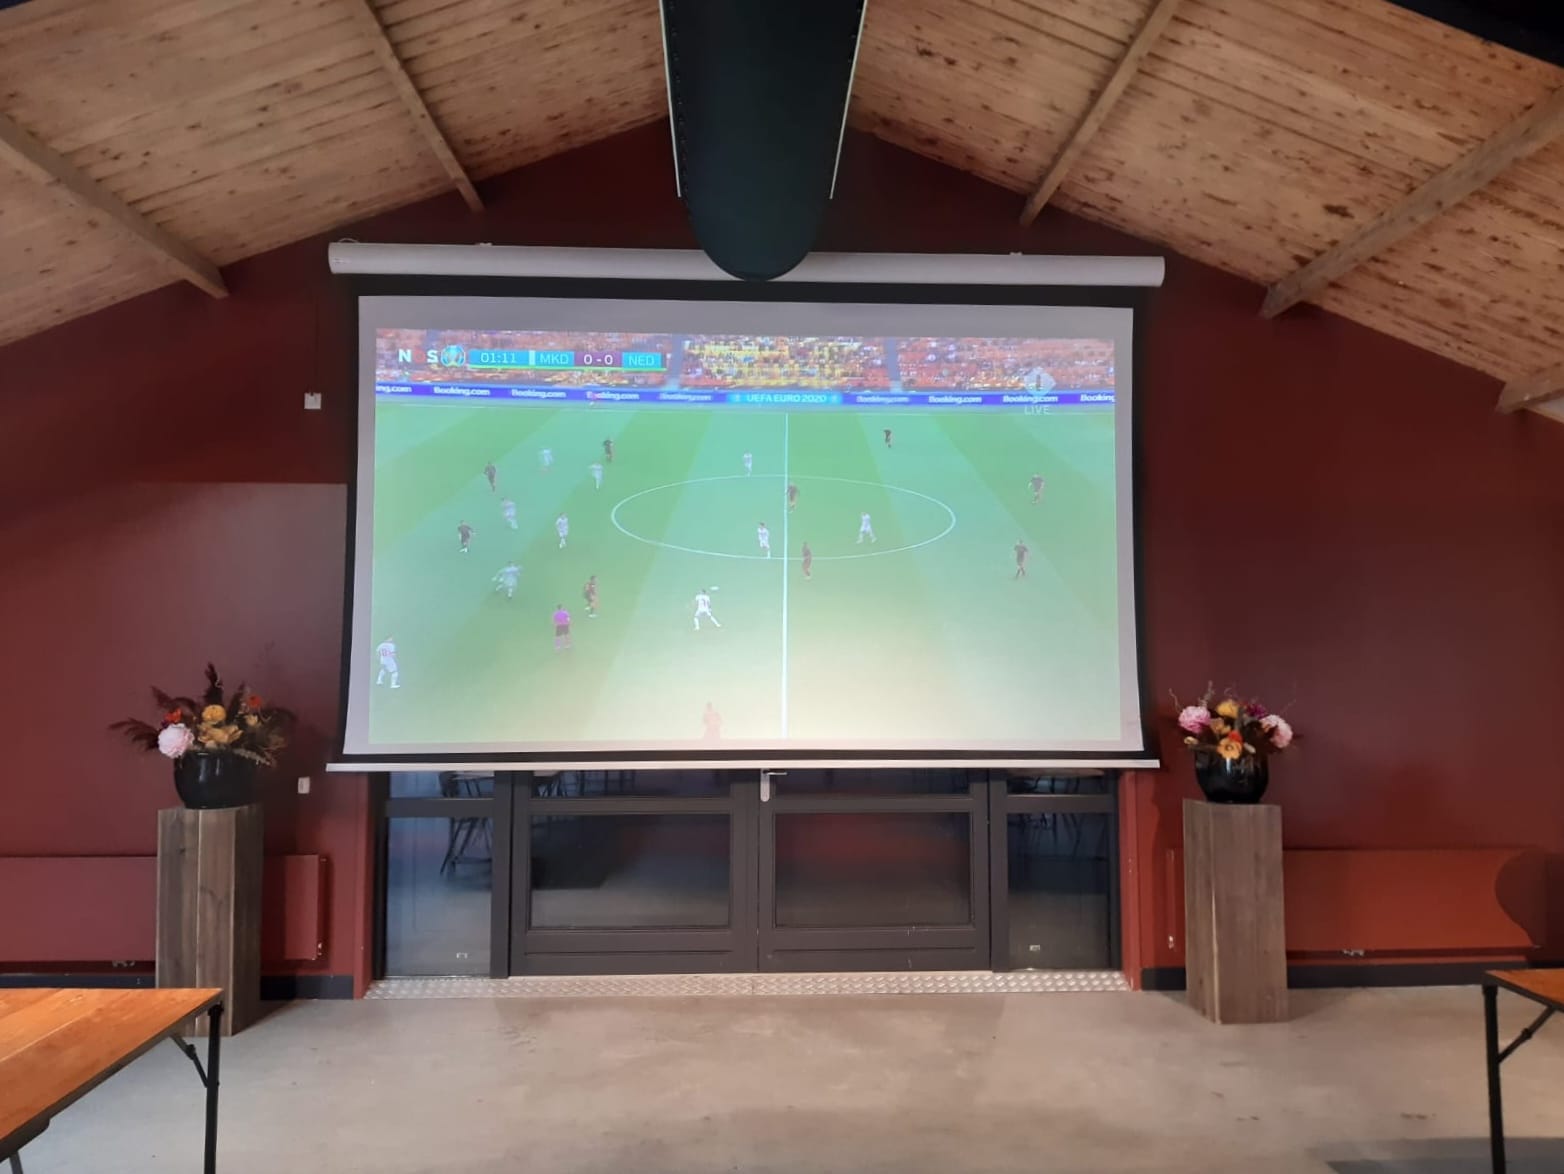 EK voetbal op groot scherm | Boerderij de Boerinn